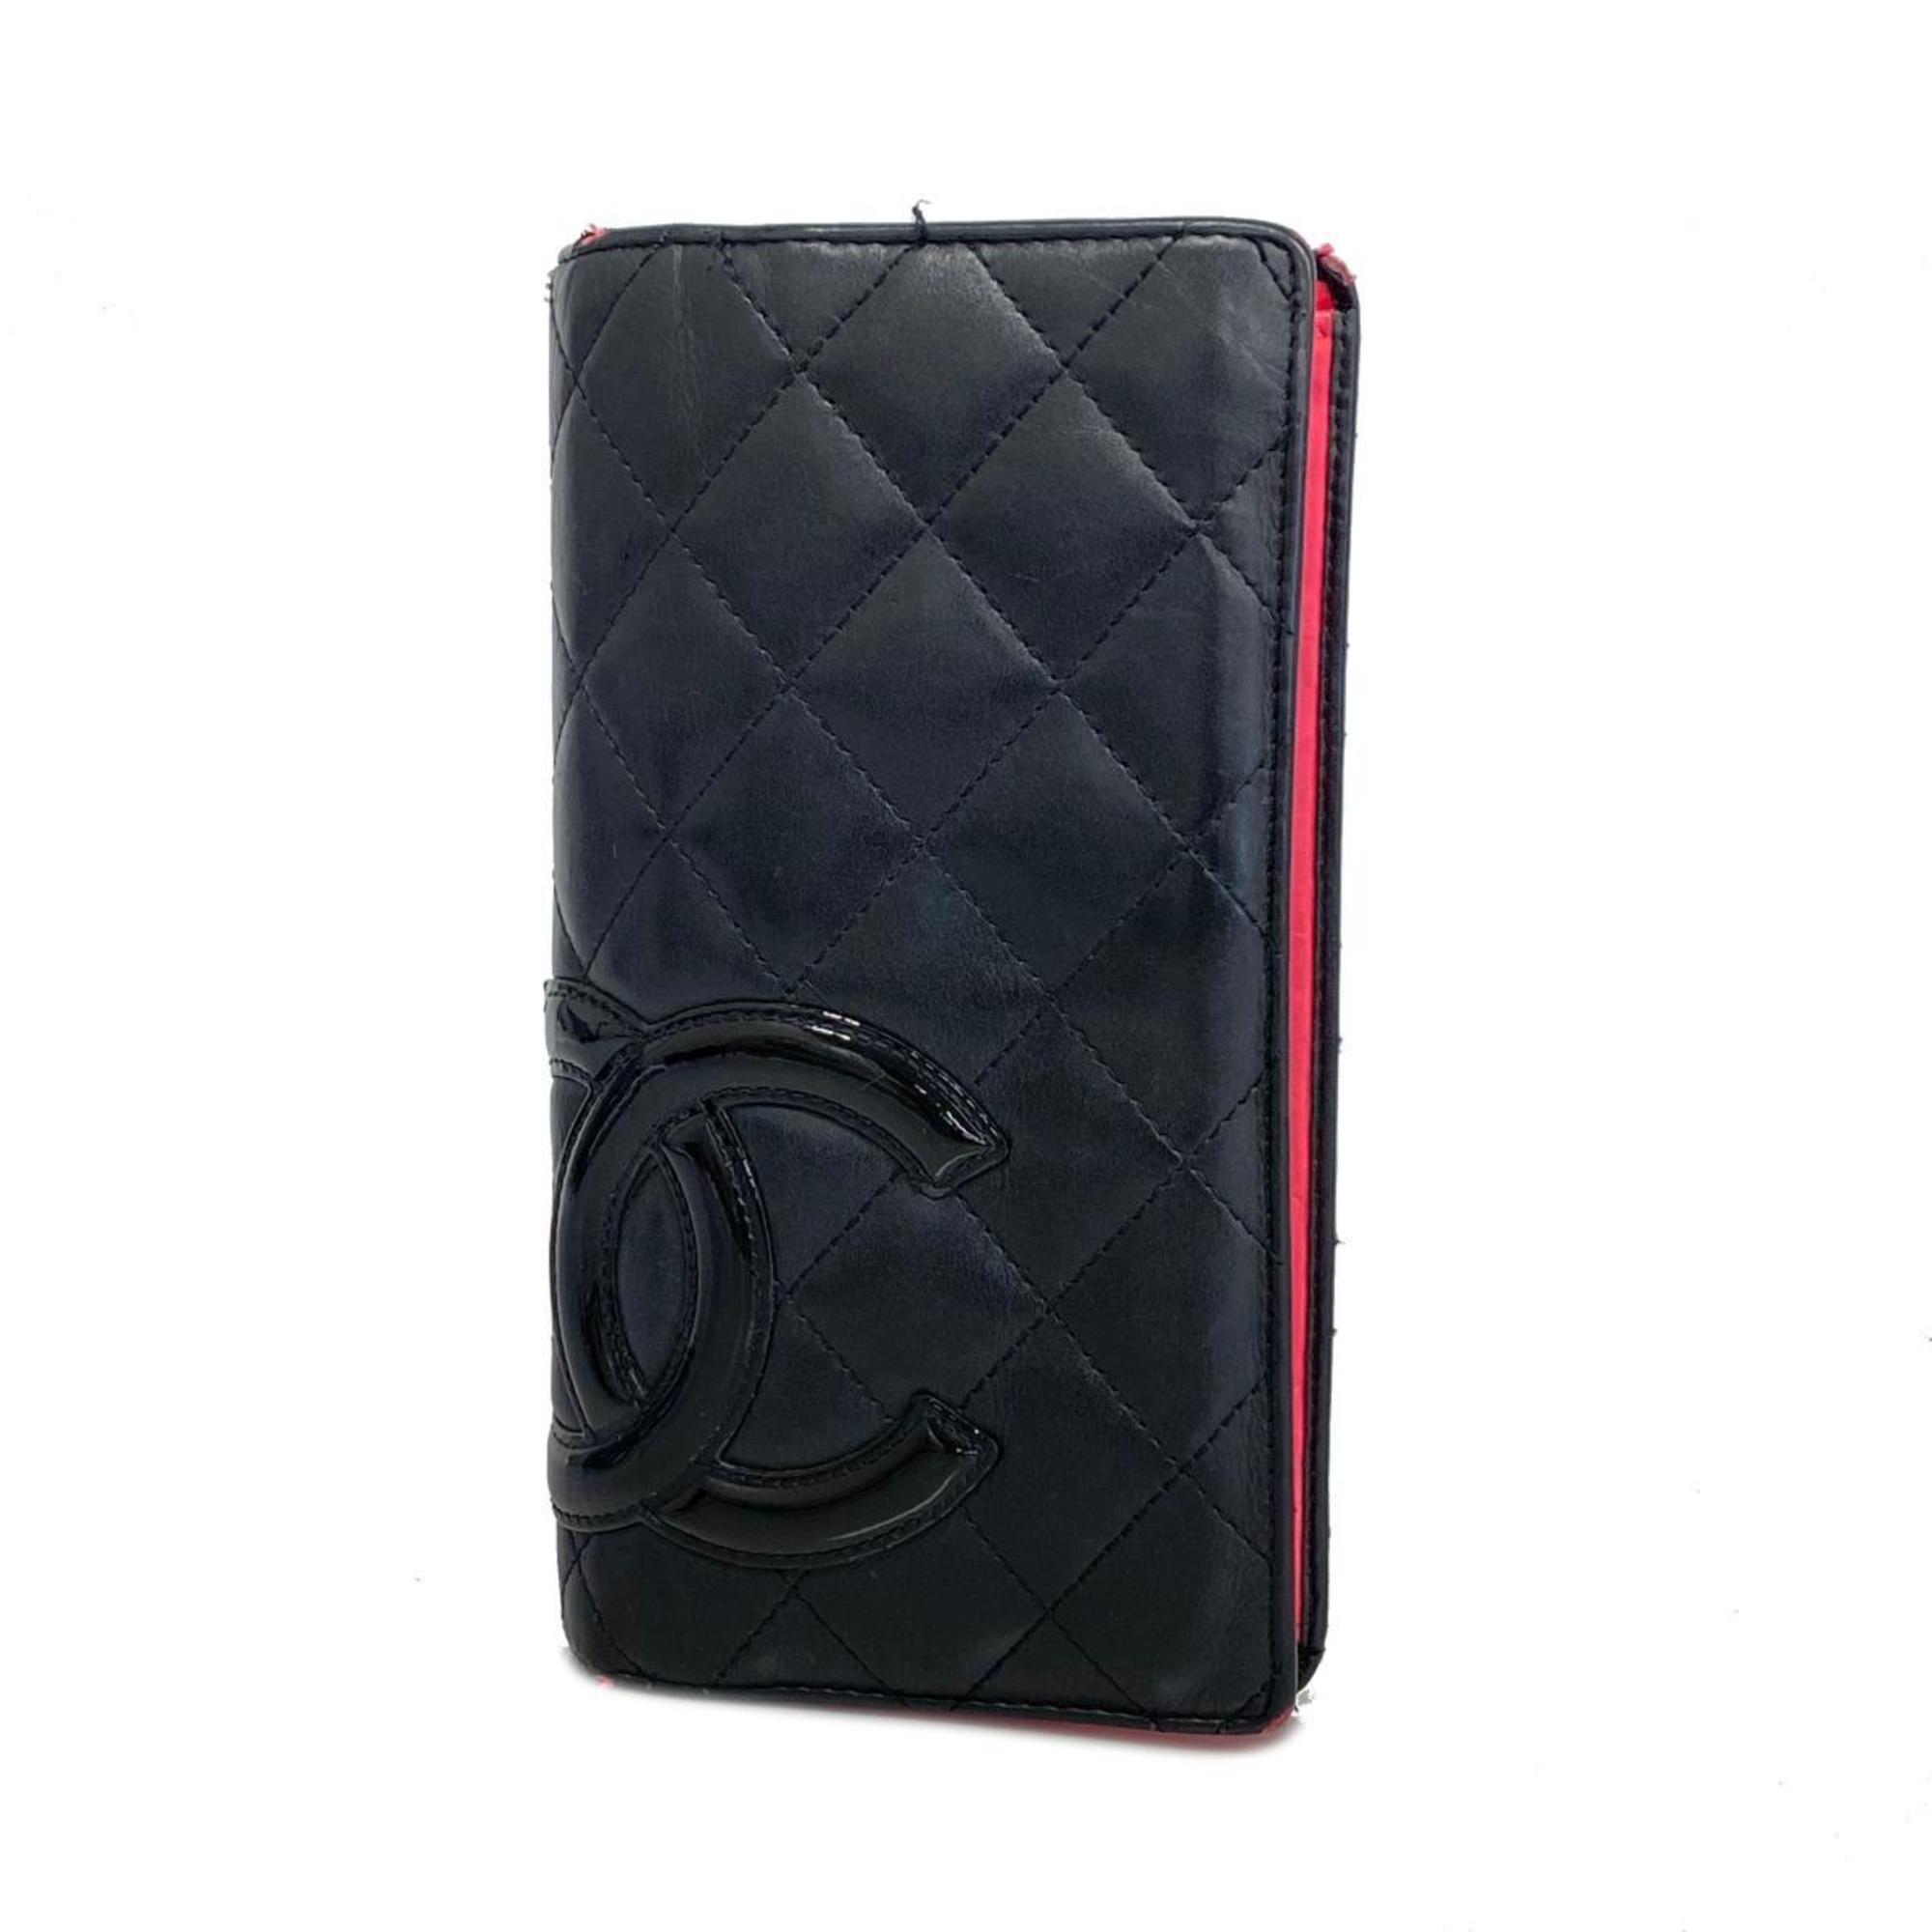 Long Wallet Cambon Lambskin Patent Leather Black Pink Women's